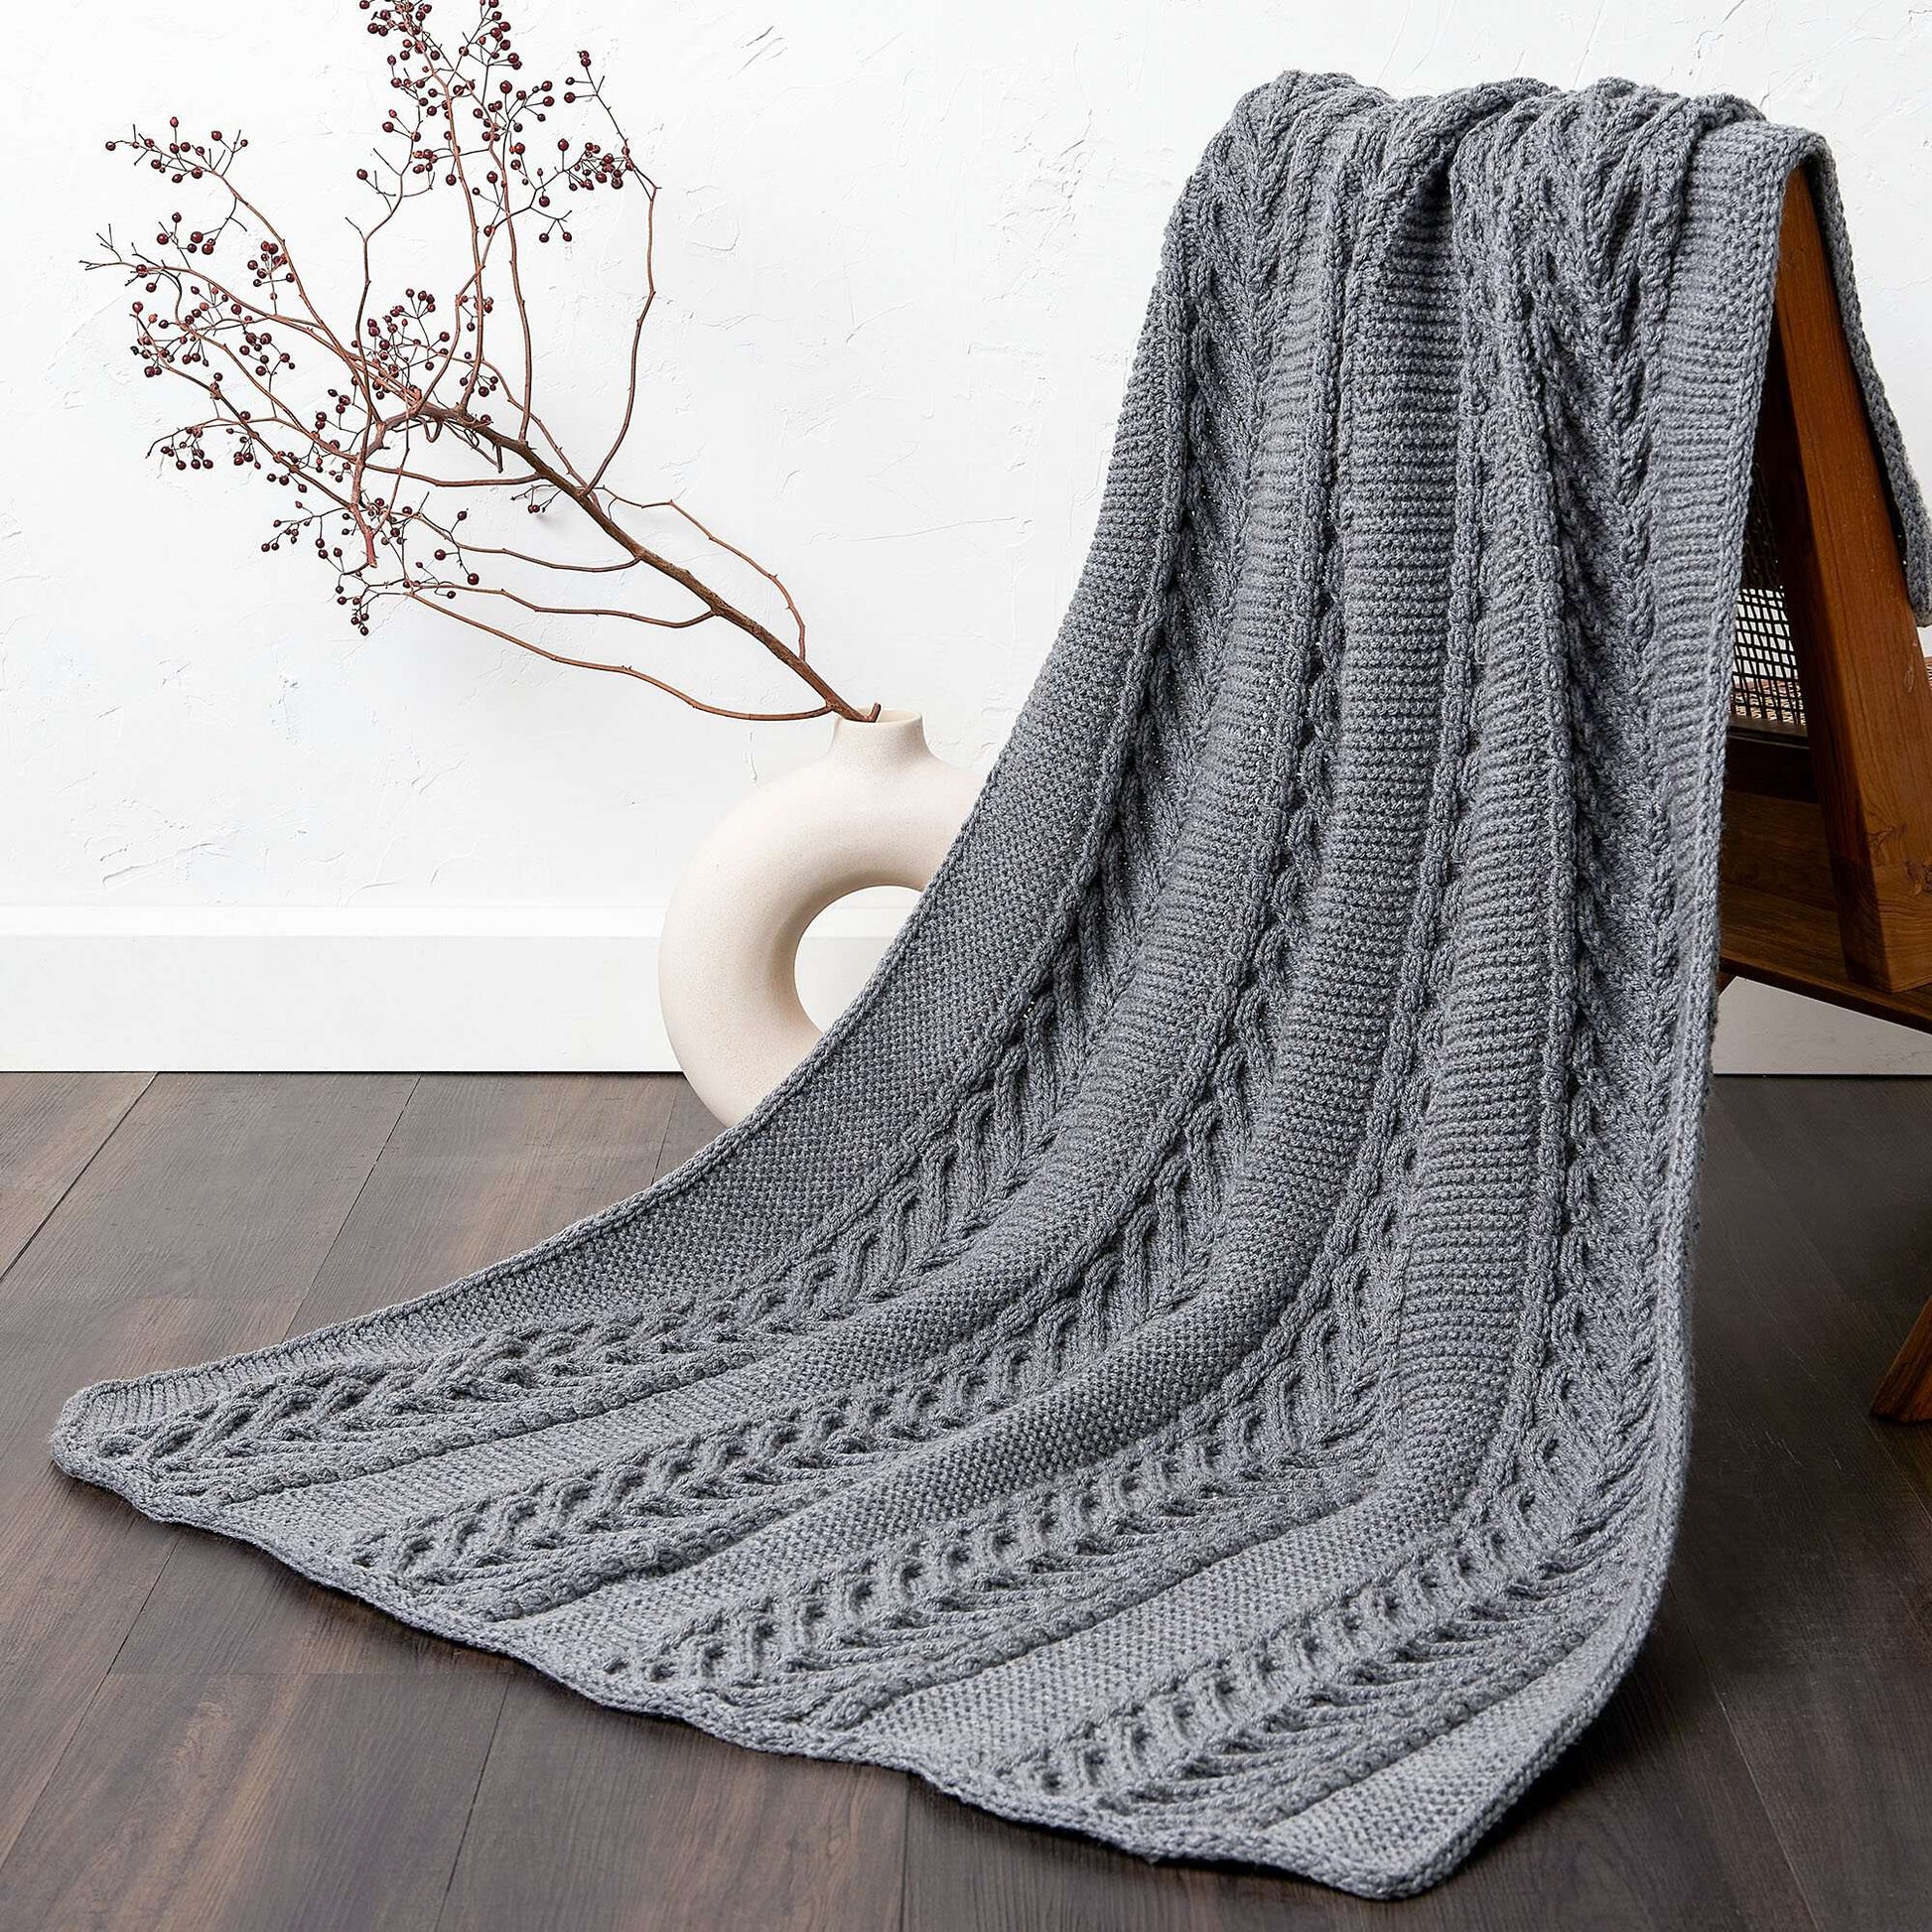 Caron Ascending Braid Knit Blanket Single Size